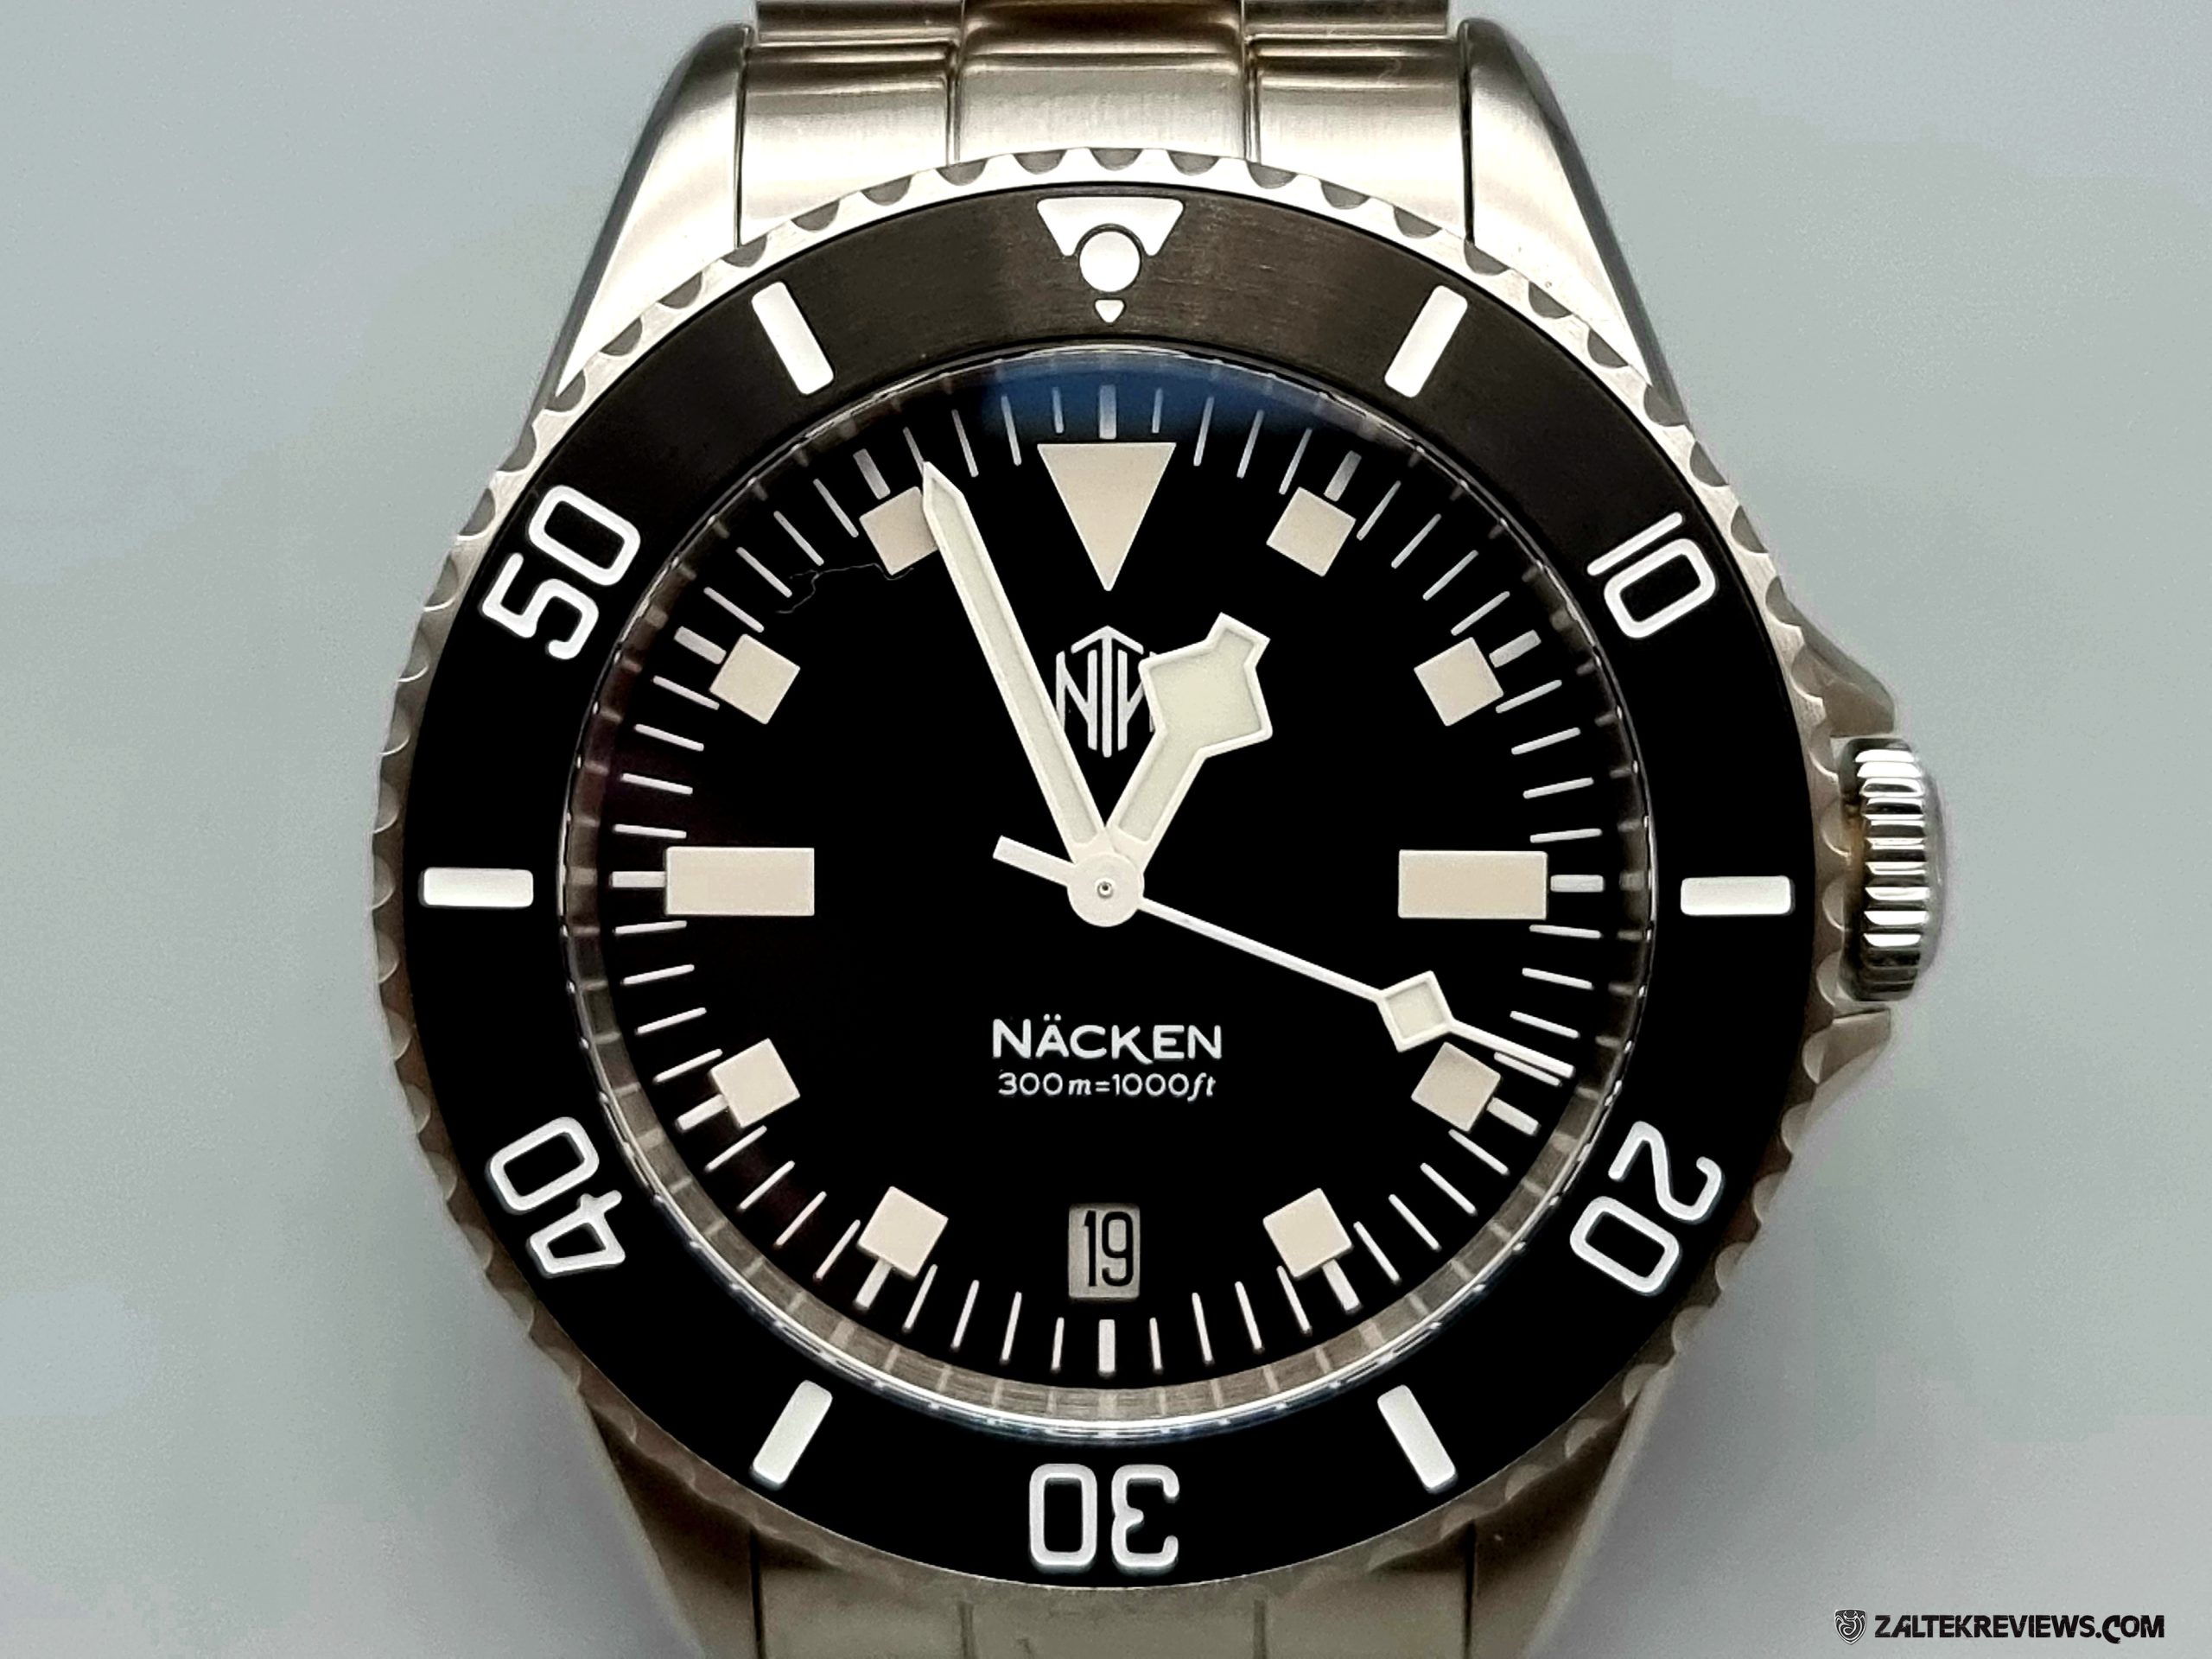 NTH Näcken v2 Modern Black Dive Watch Review